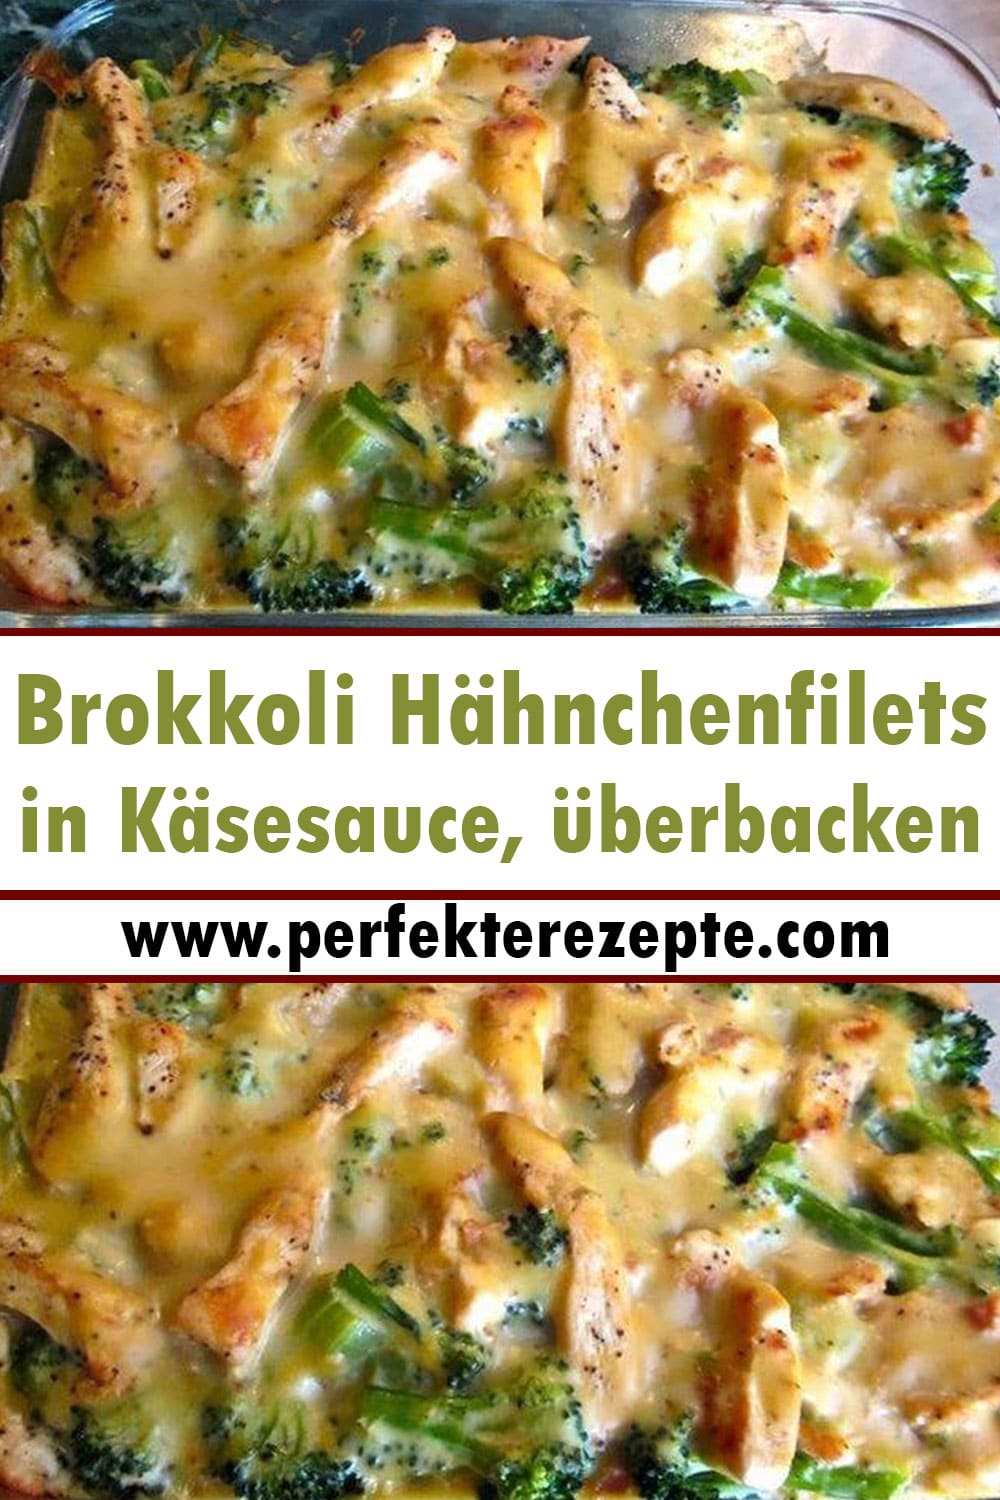 Brokkoli Hähnchenfilets in Käsesauce, überbacken Rezept